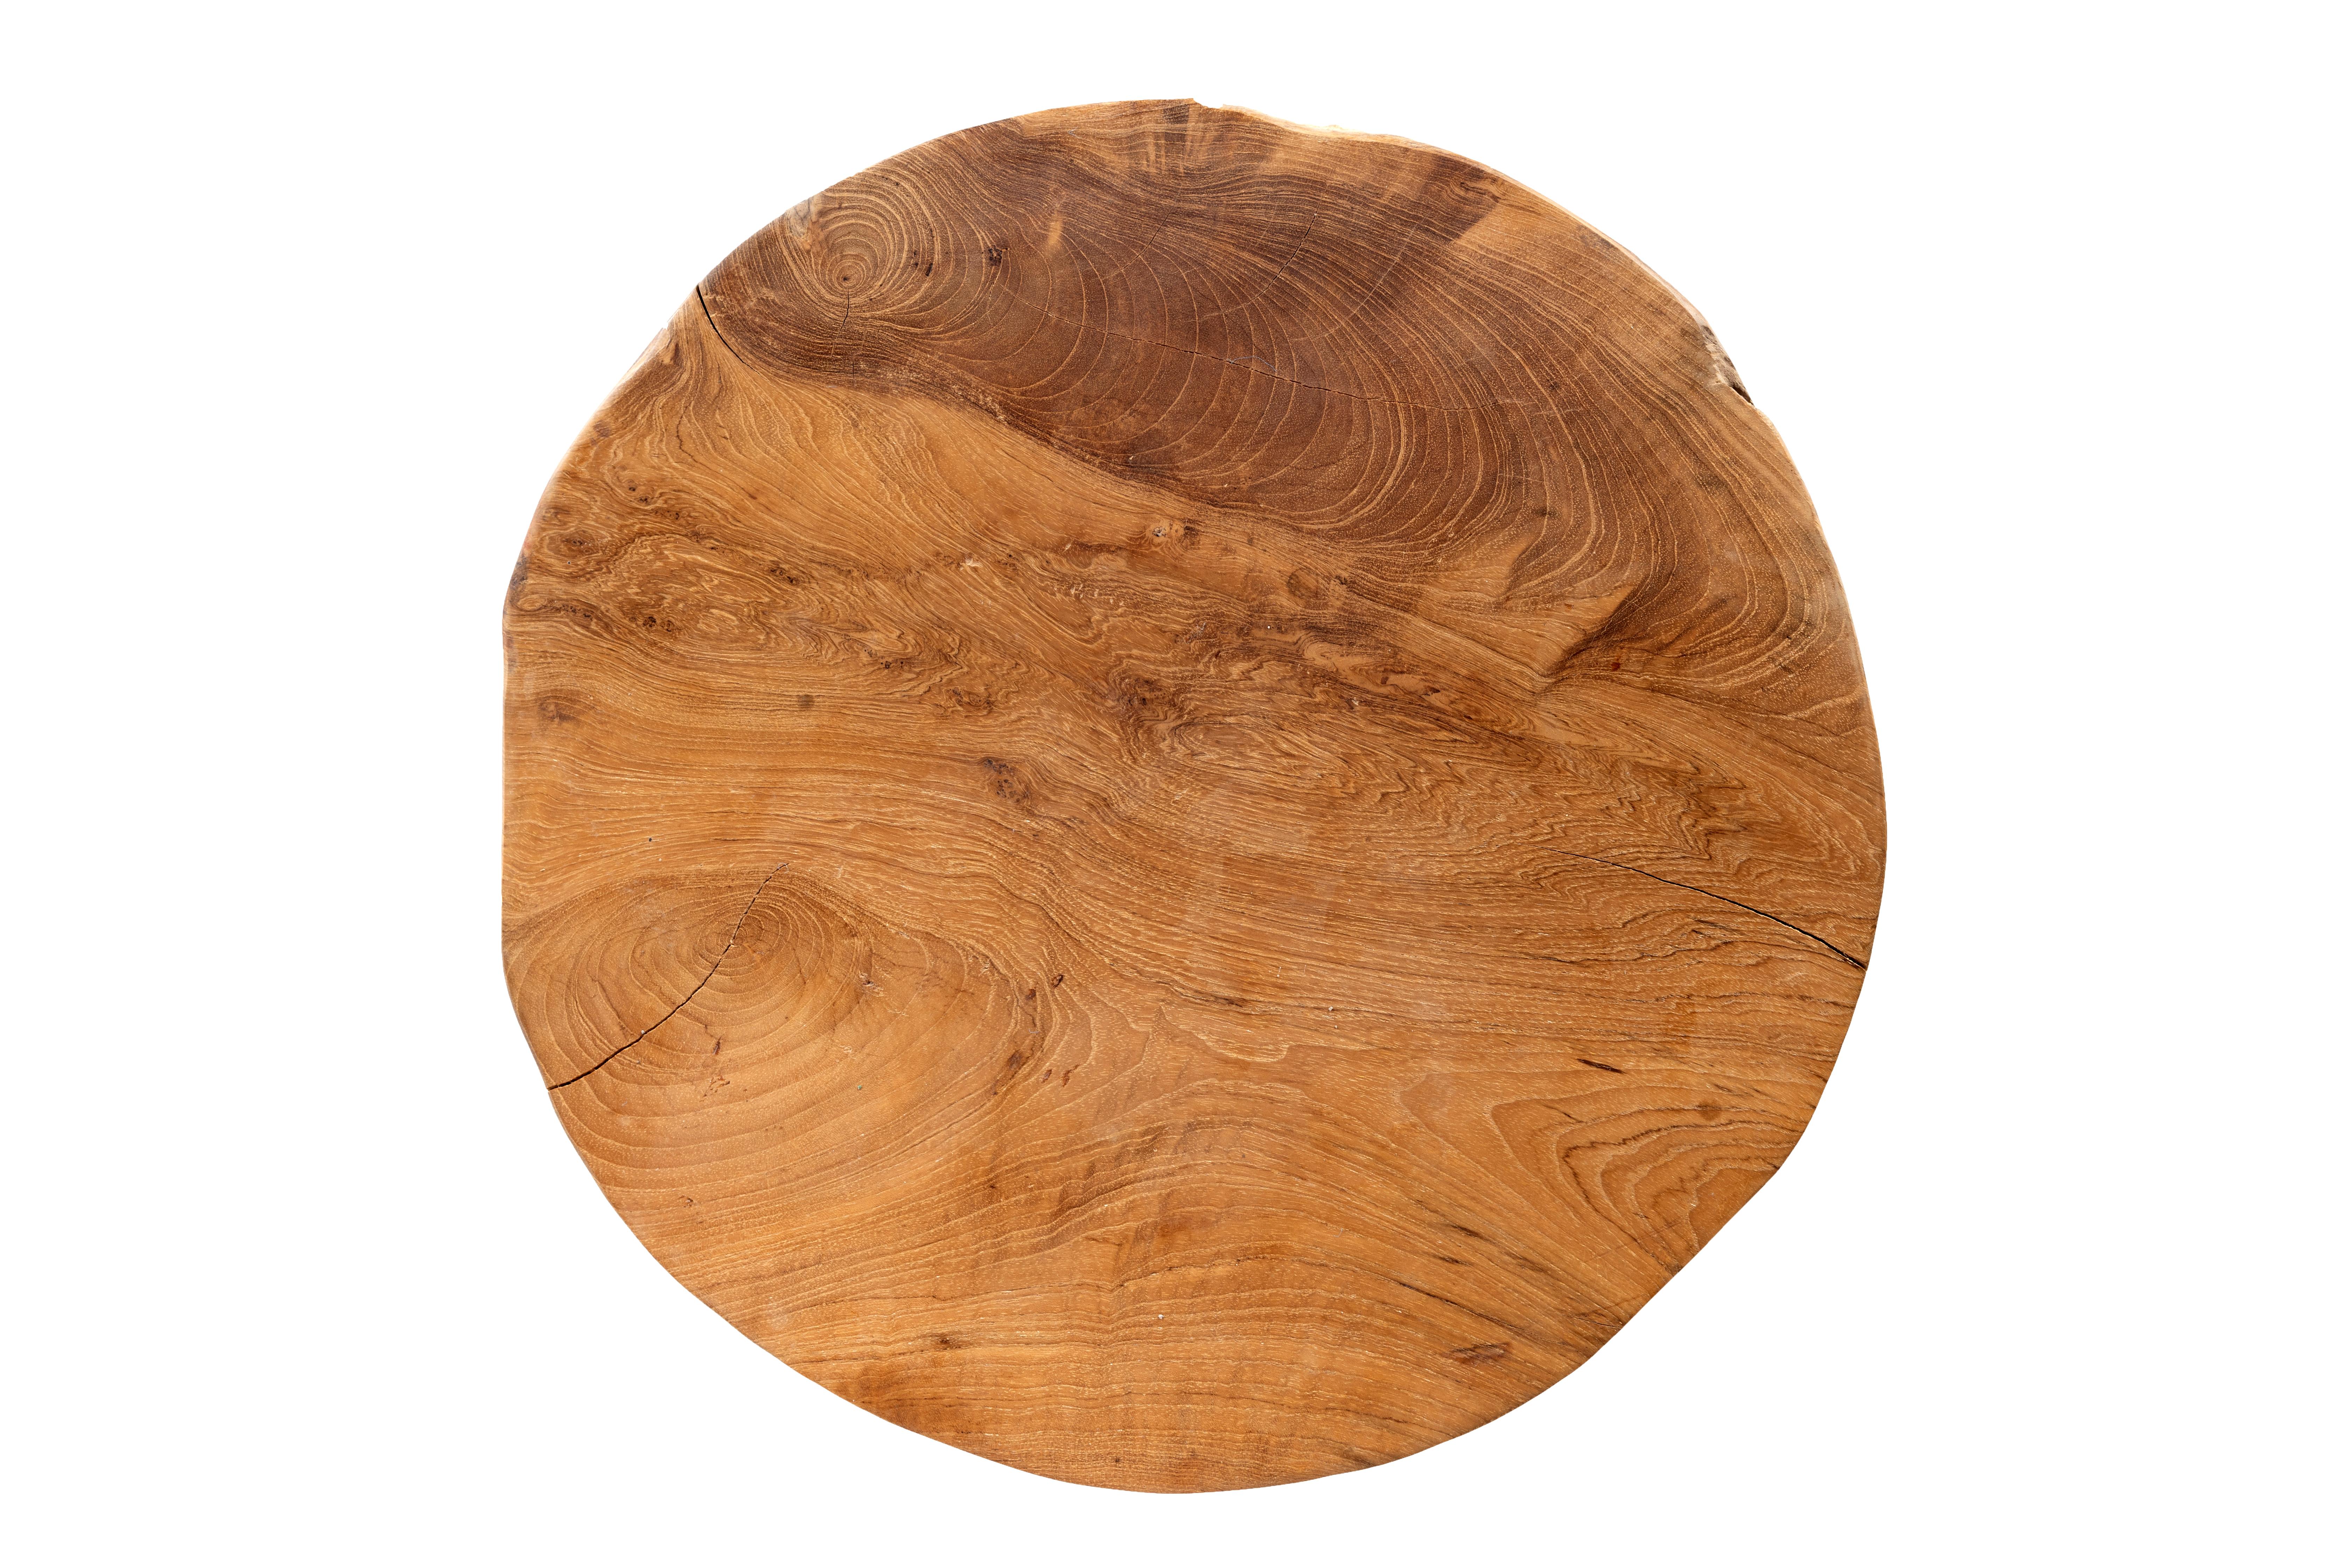 Organic Modern Organic Form Tropical Hardwood End Table  For Sale